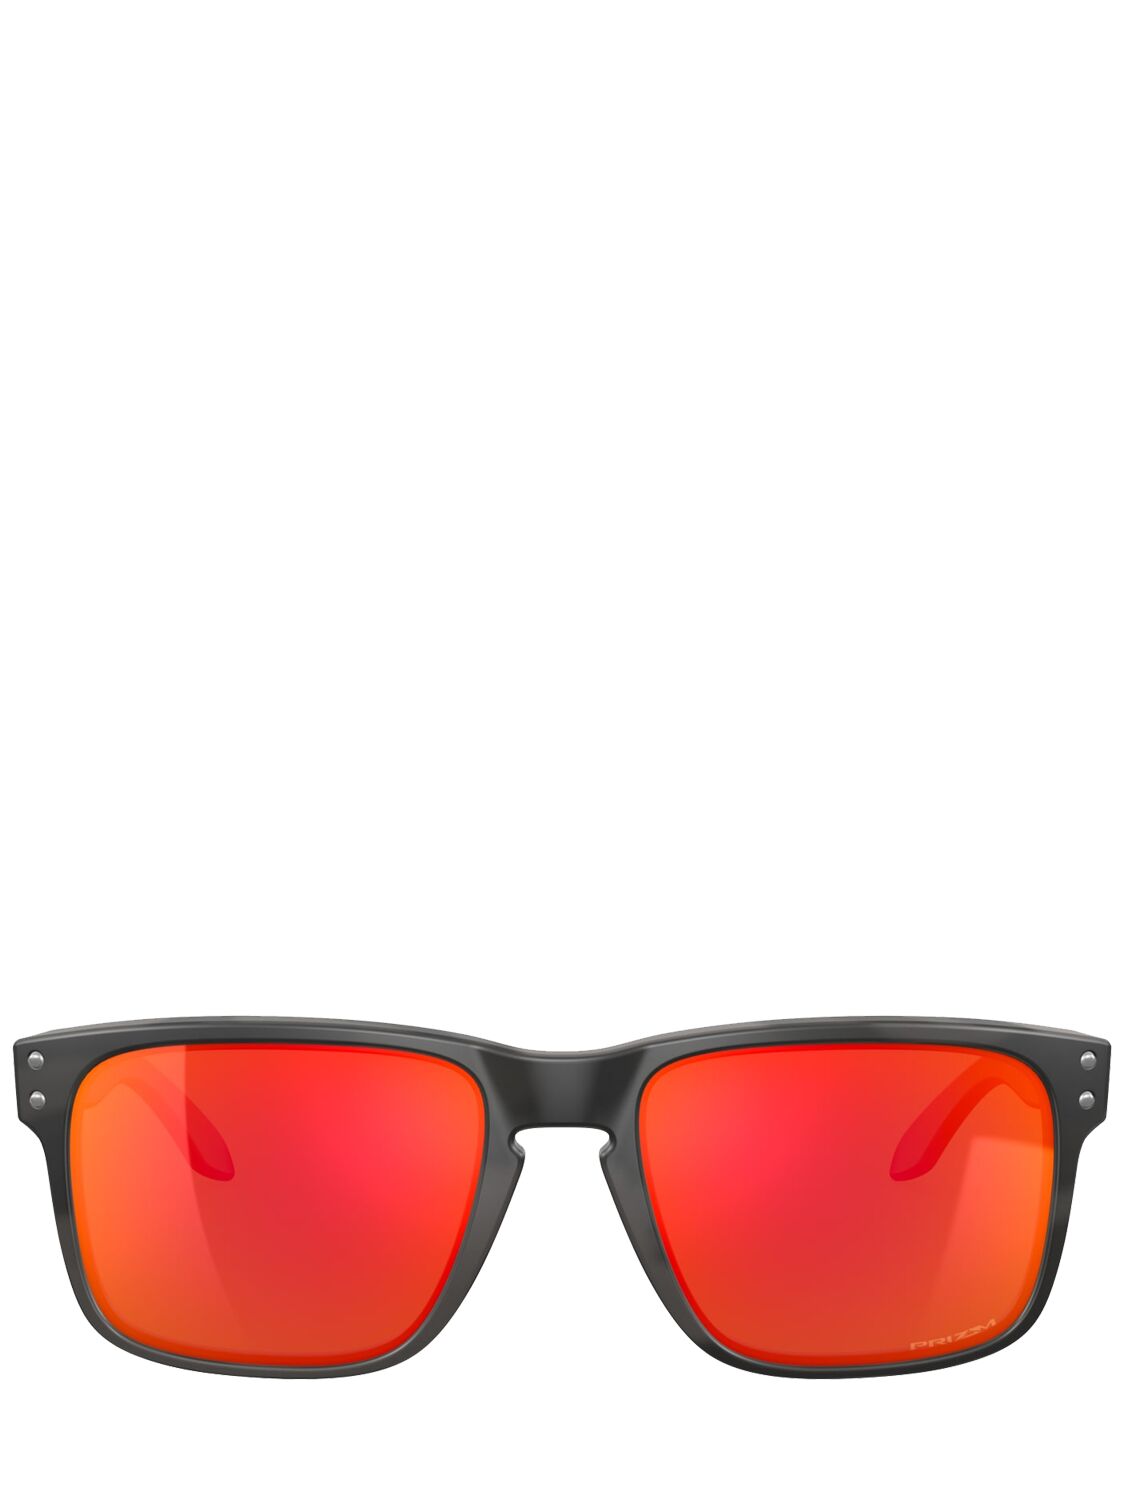 Image of Holbrook Prizm Sunglasses